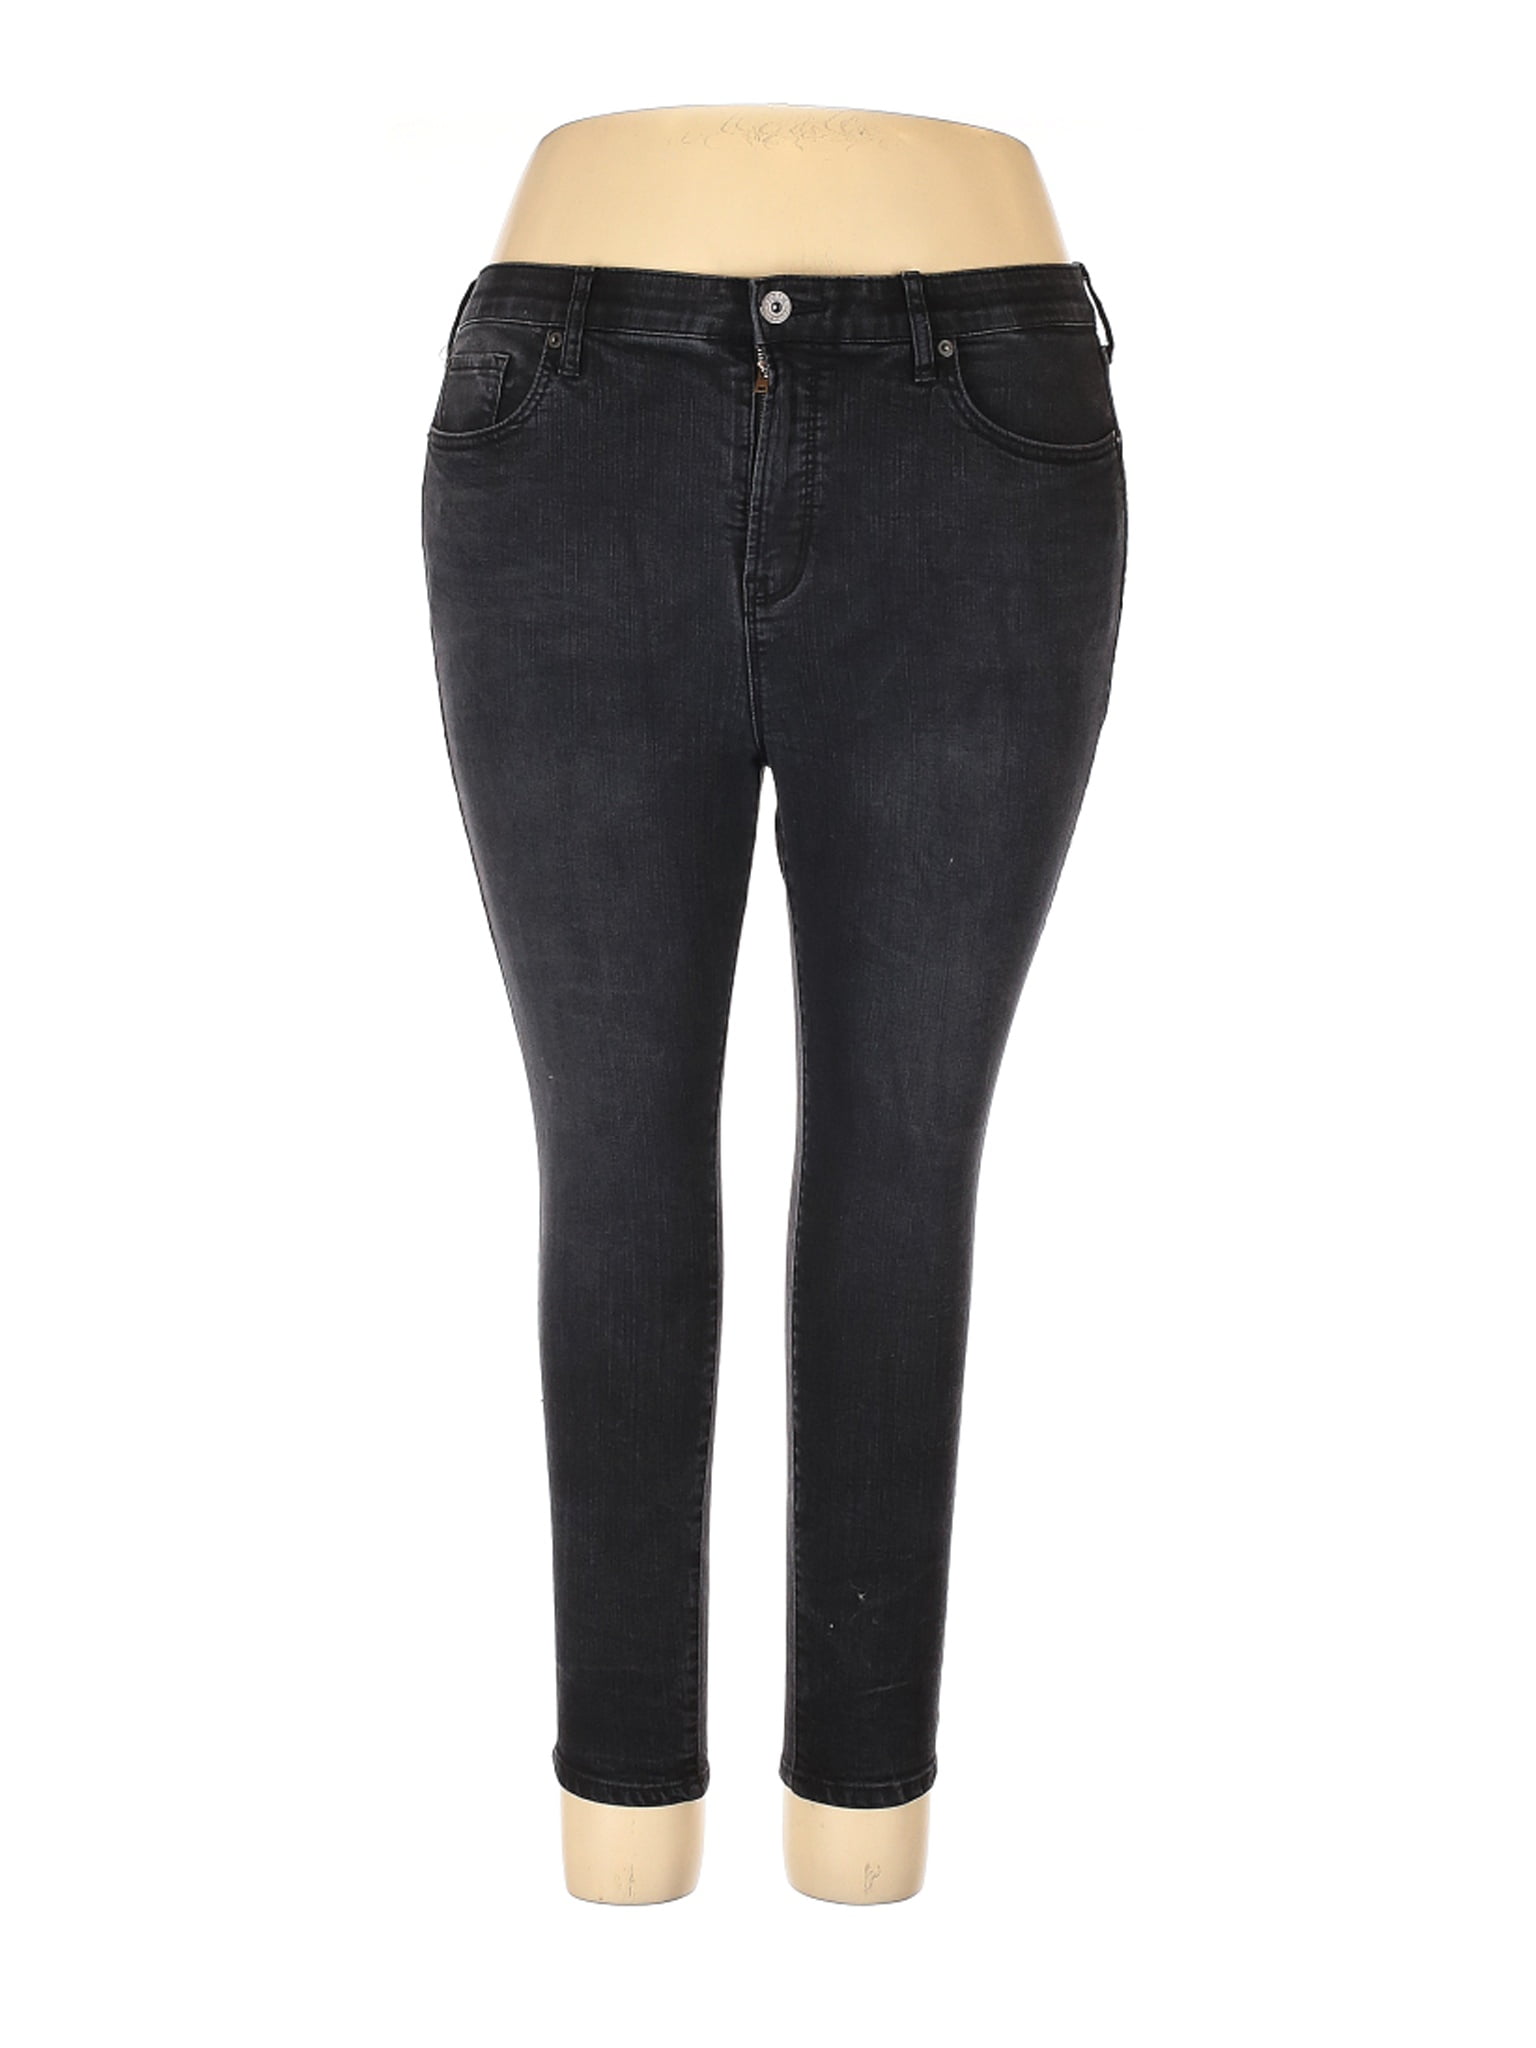 Torrid - Pre-Owned Torrid Women's Size 20 Plus Jeans - Walmart.com ...